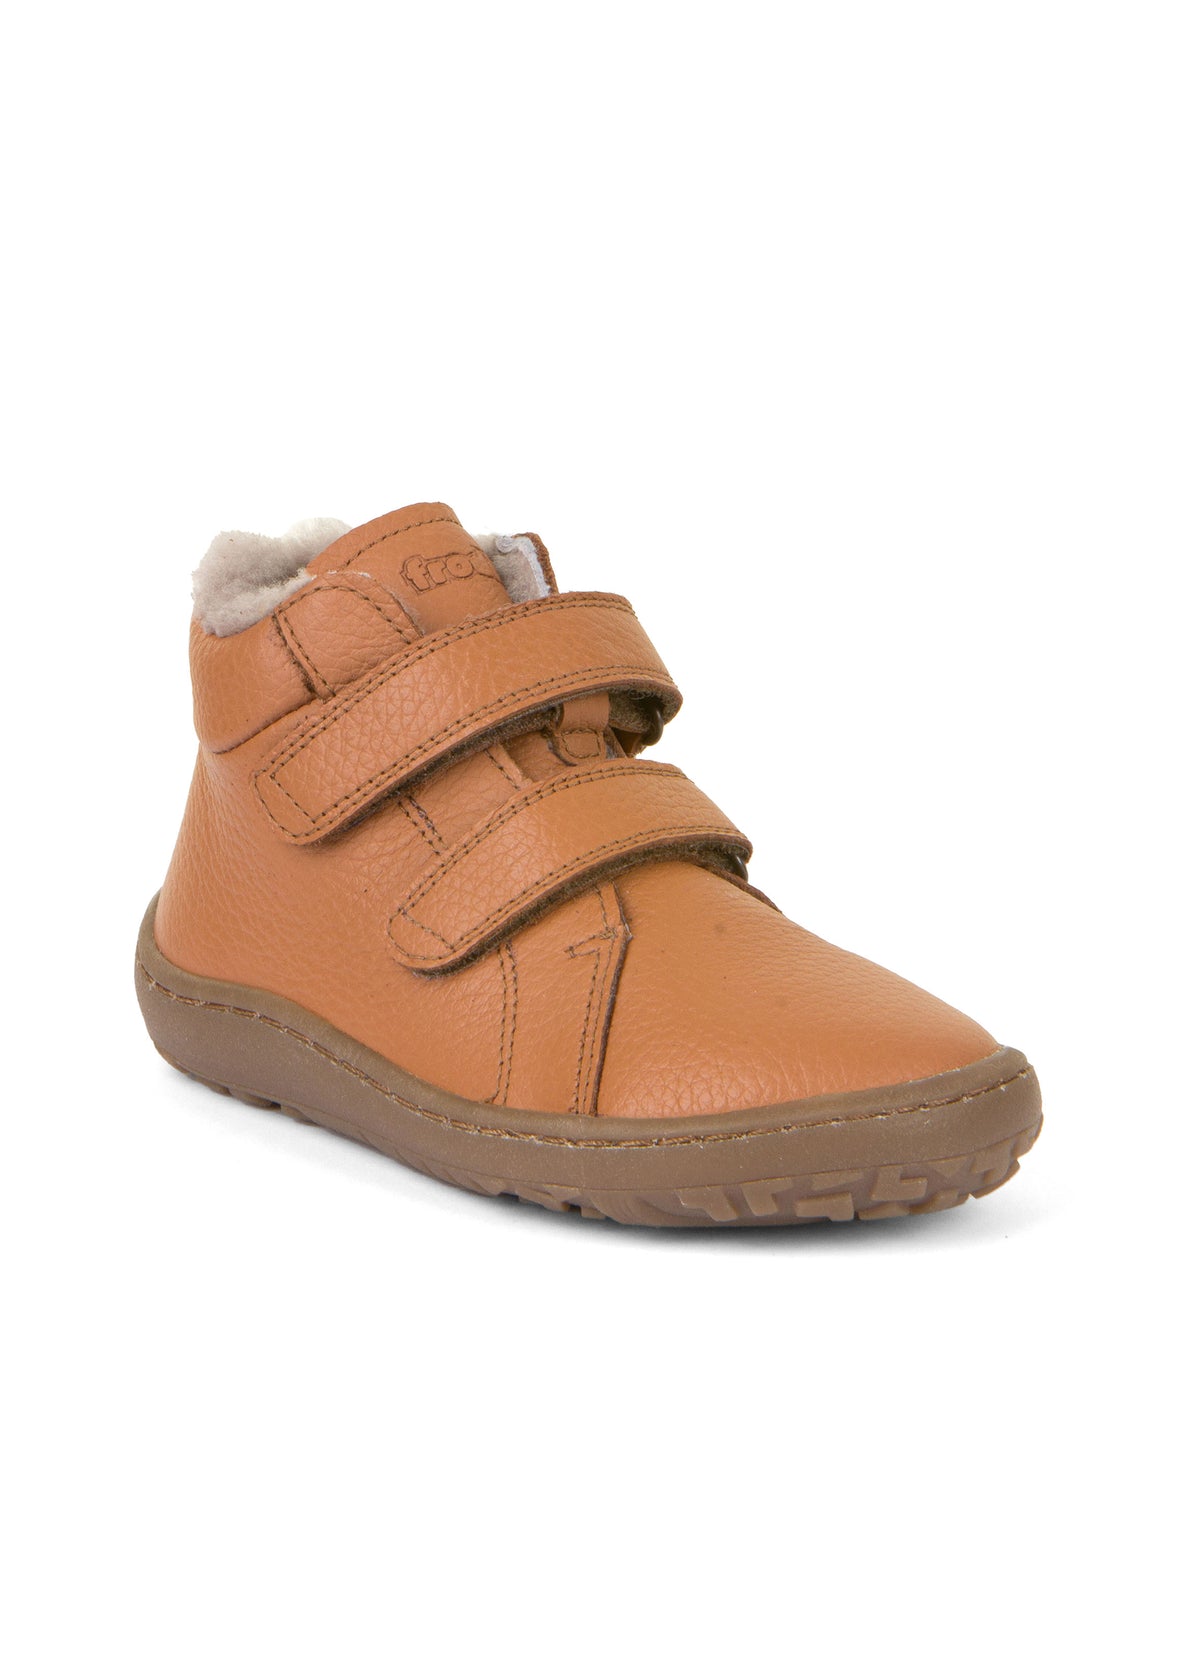 Children's barefoot boots, winter shoes - Winter Furry, cognac brown